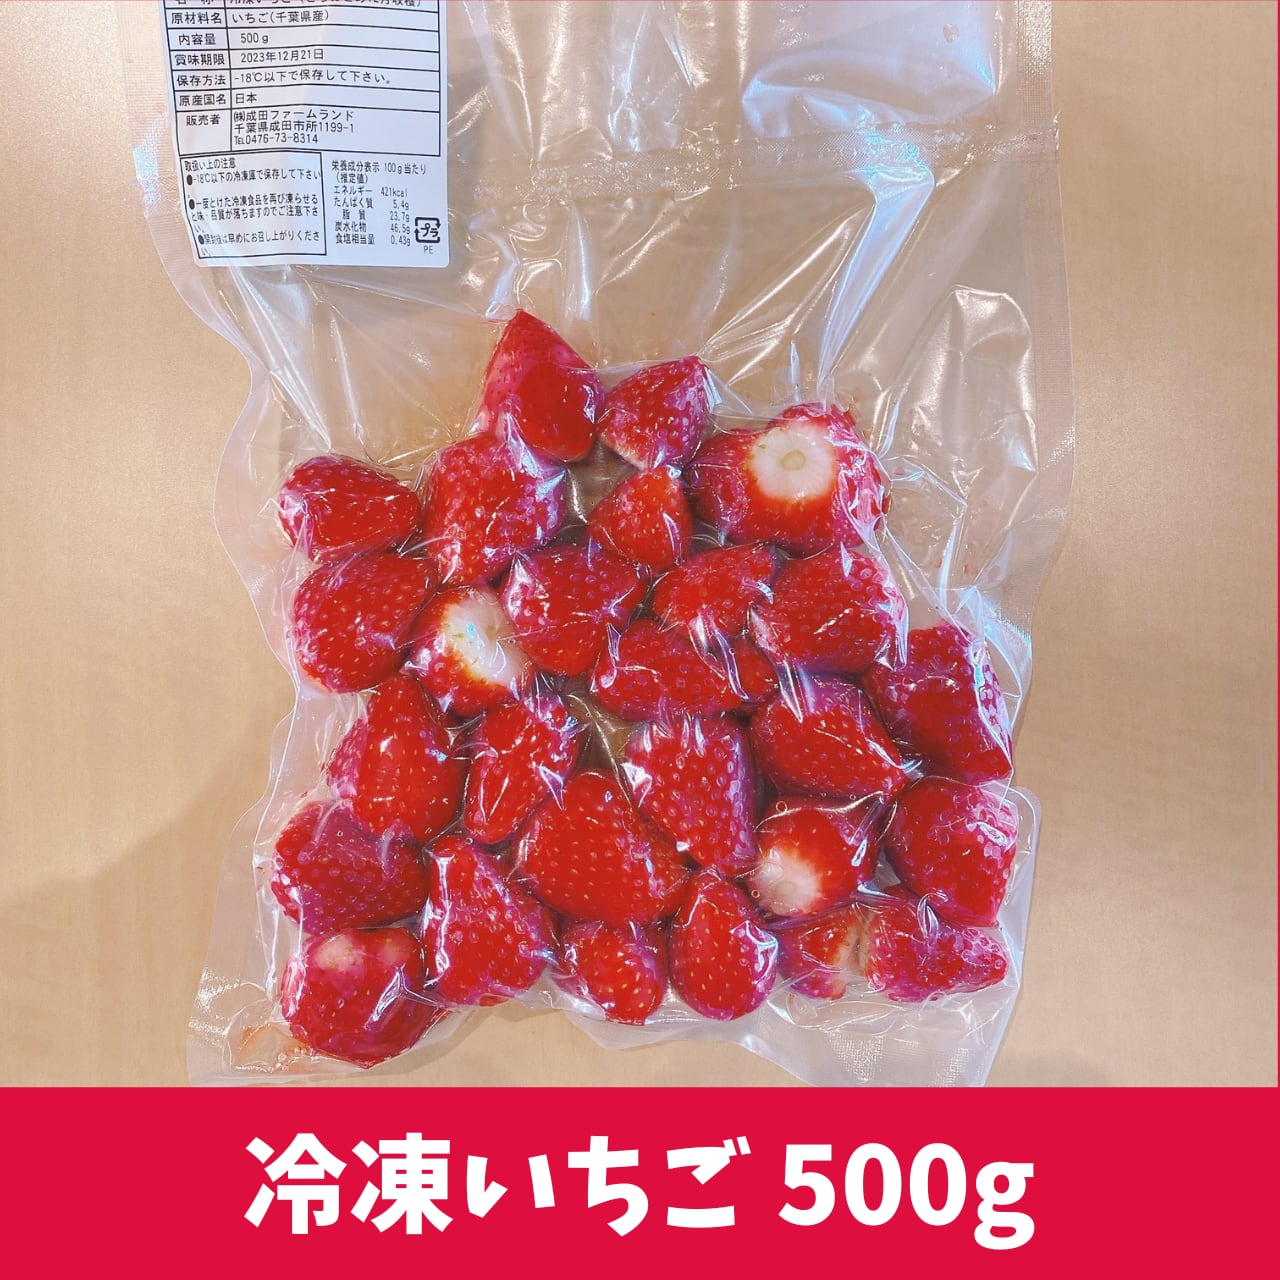 500g×1袋　冷凍イチゴ　成田ファームランド公式ネットショップ